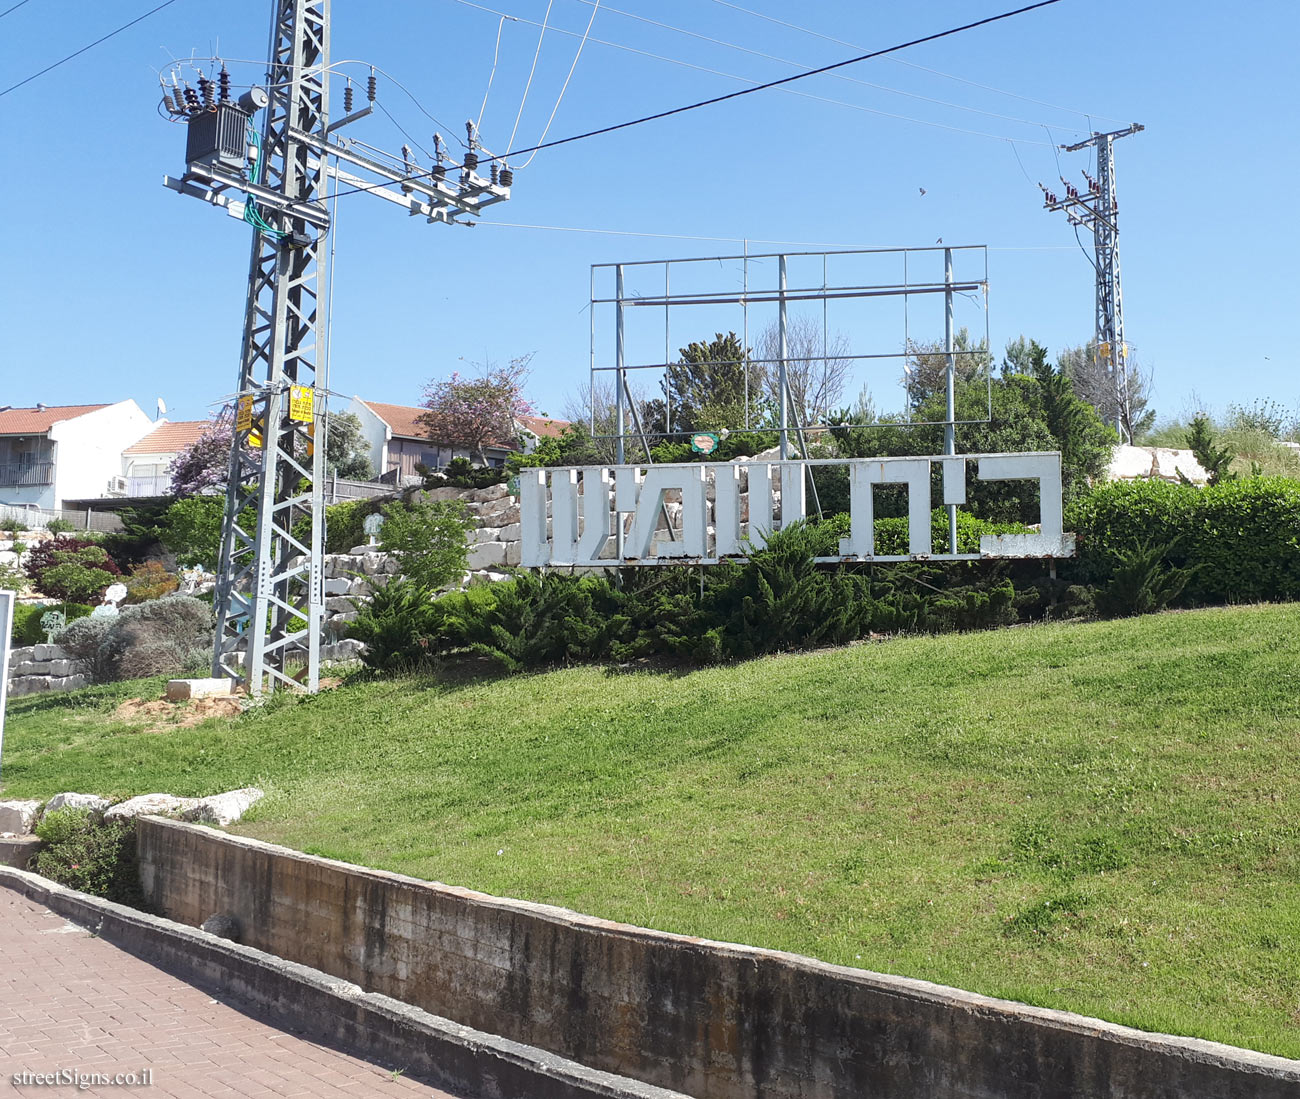 Beit Shemesh - the entrance sign to the city - Ben Ze’ev/38, Bet Shemesh, Israel